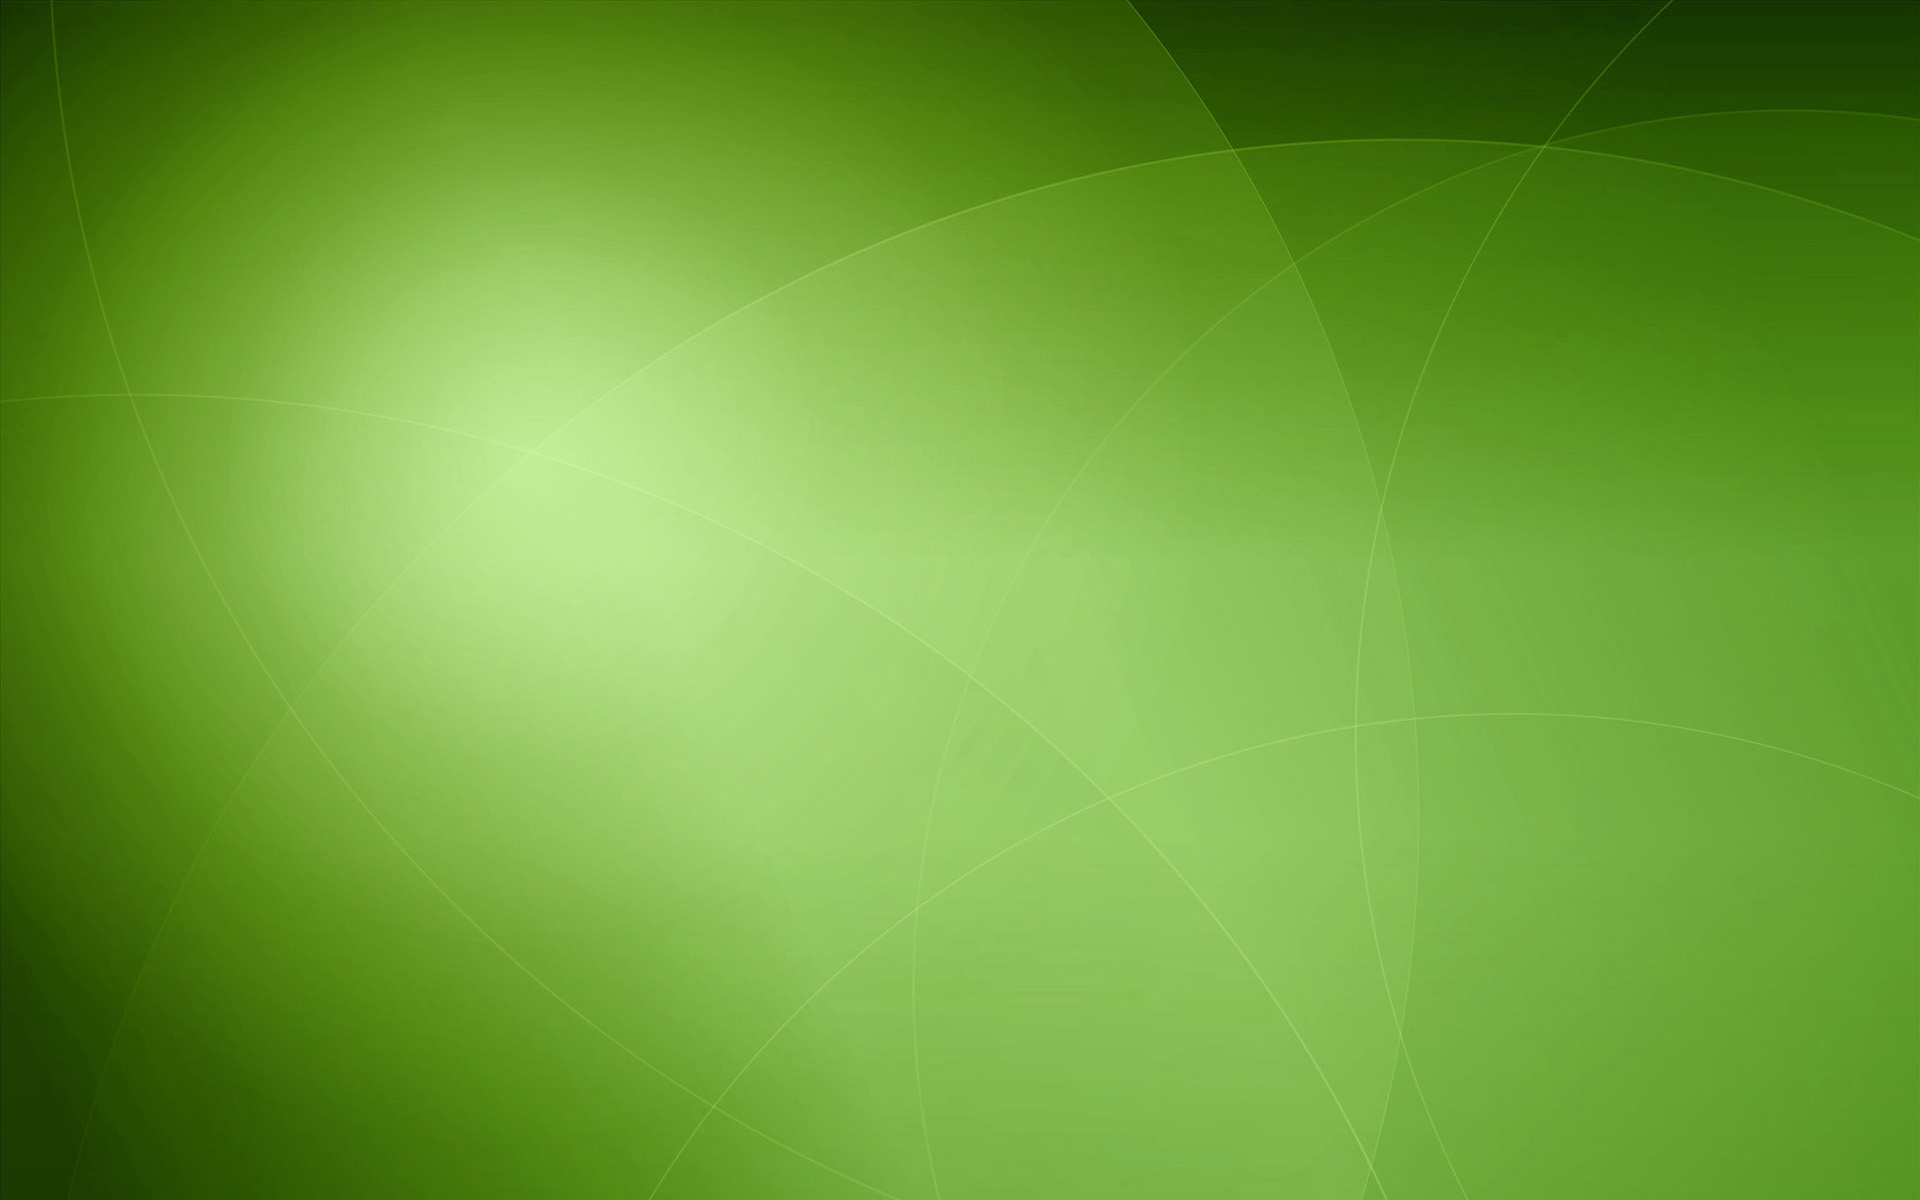  Abstract Desktop Wallpapers Green Image